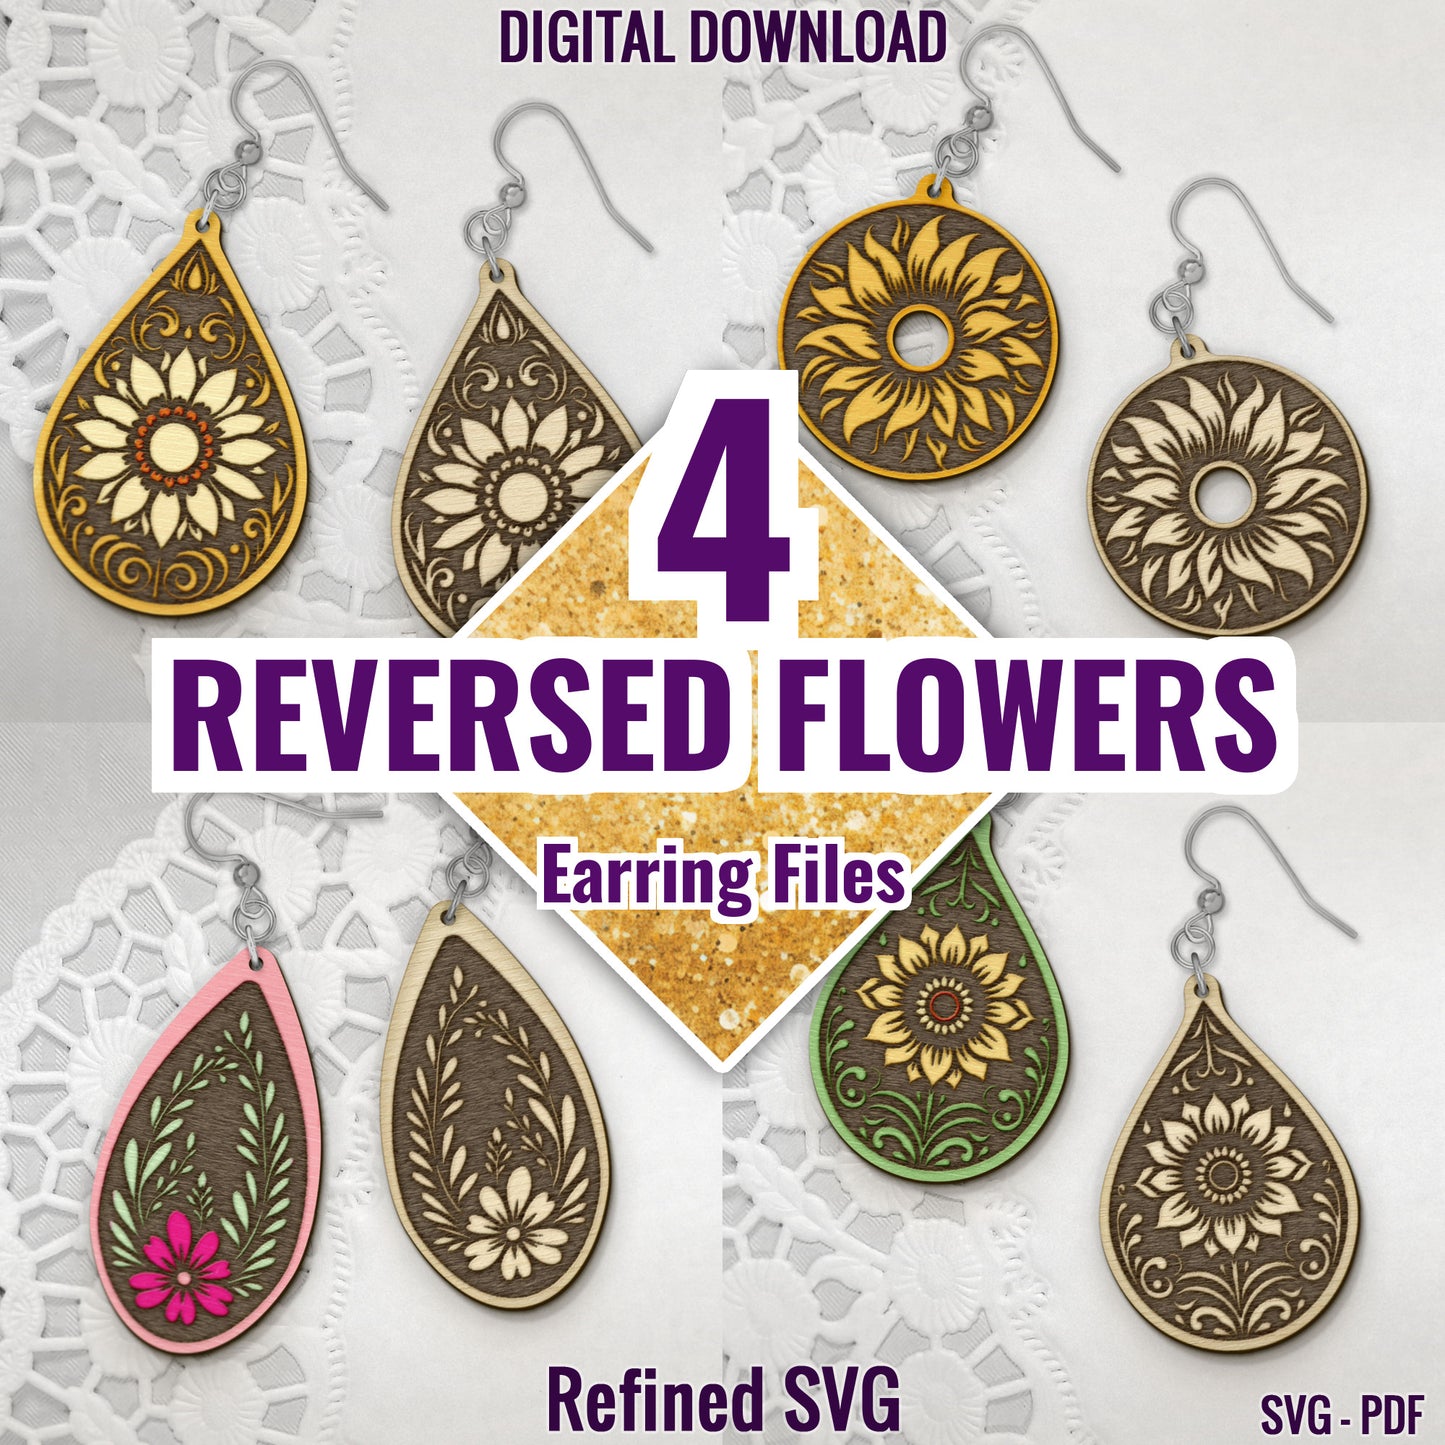 Reversed Flowers Earring SVG Bundle, 4 Flowers Earring Files, Reversed Flowers Earring SVG Set, Sunflower Earring Cut Files